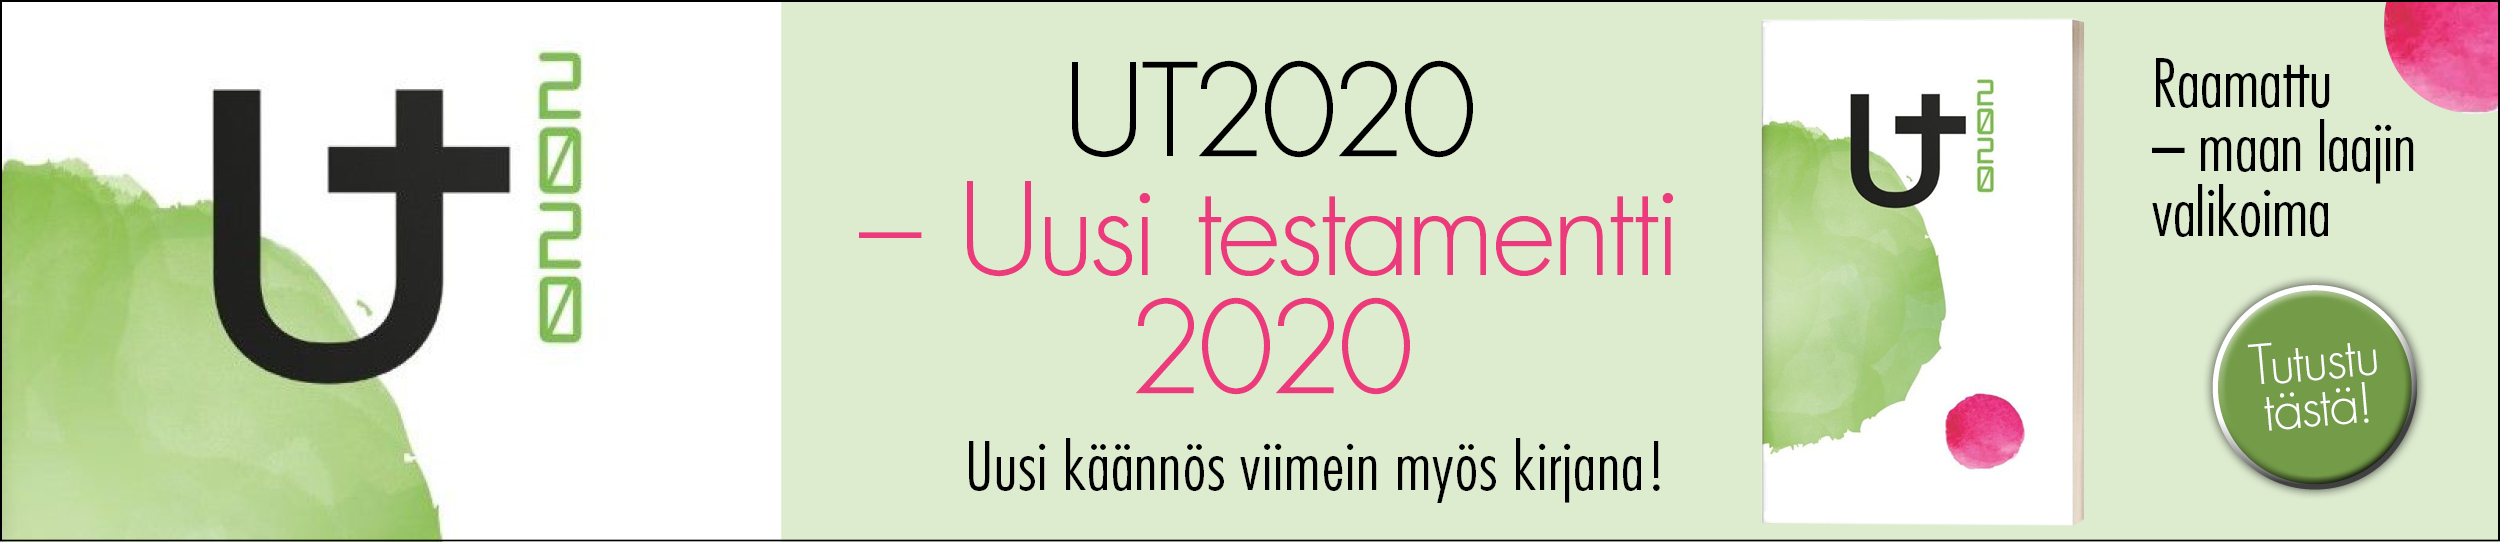 Uusi testamentti 2020 UT2020